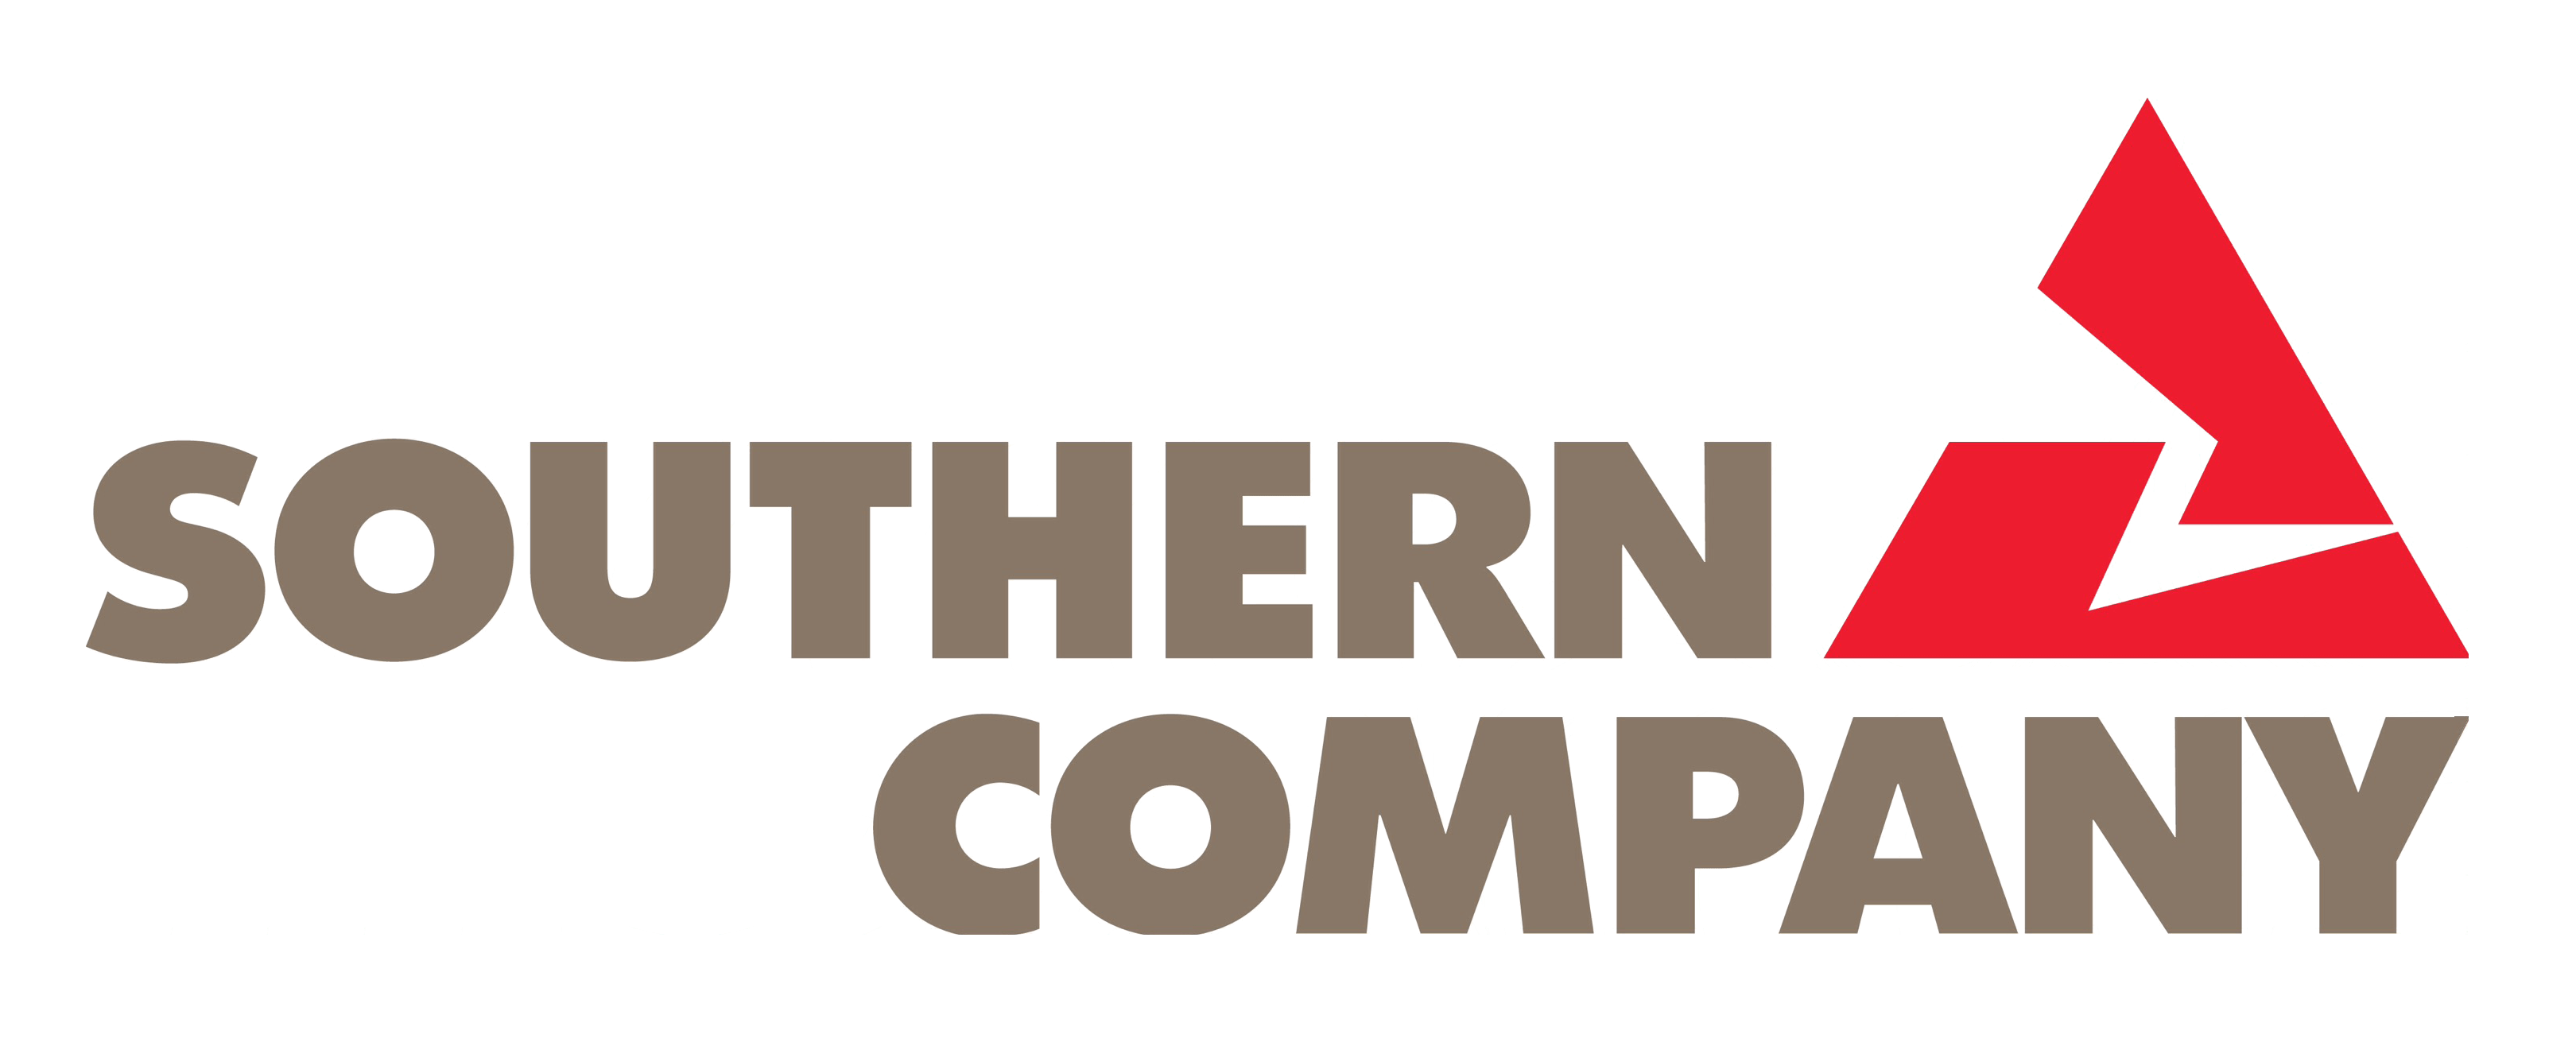 Southern Company Logo - Southern Company Logo PNG Image - PurePNG | Free transparent CC0 PNG ...